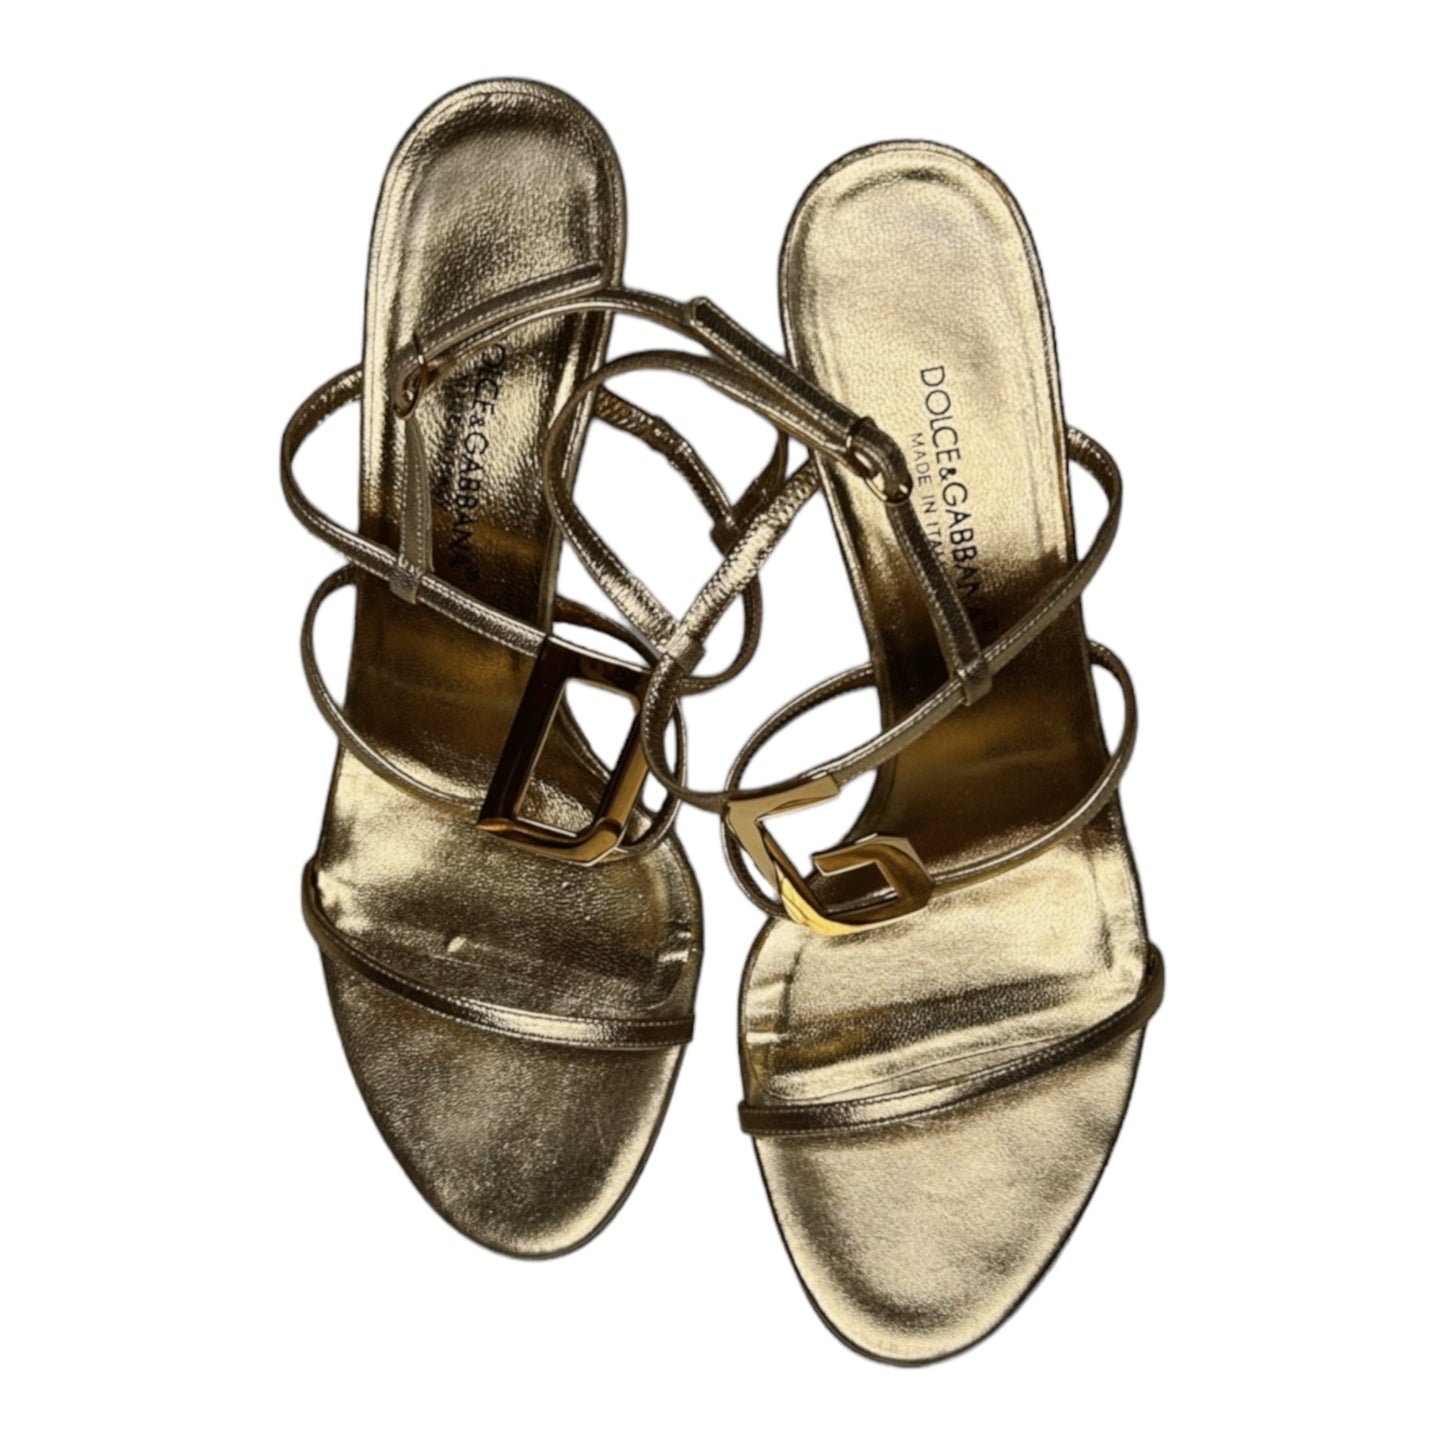 Vintage Dolce&Gabbana golden sandals